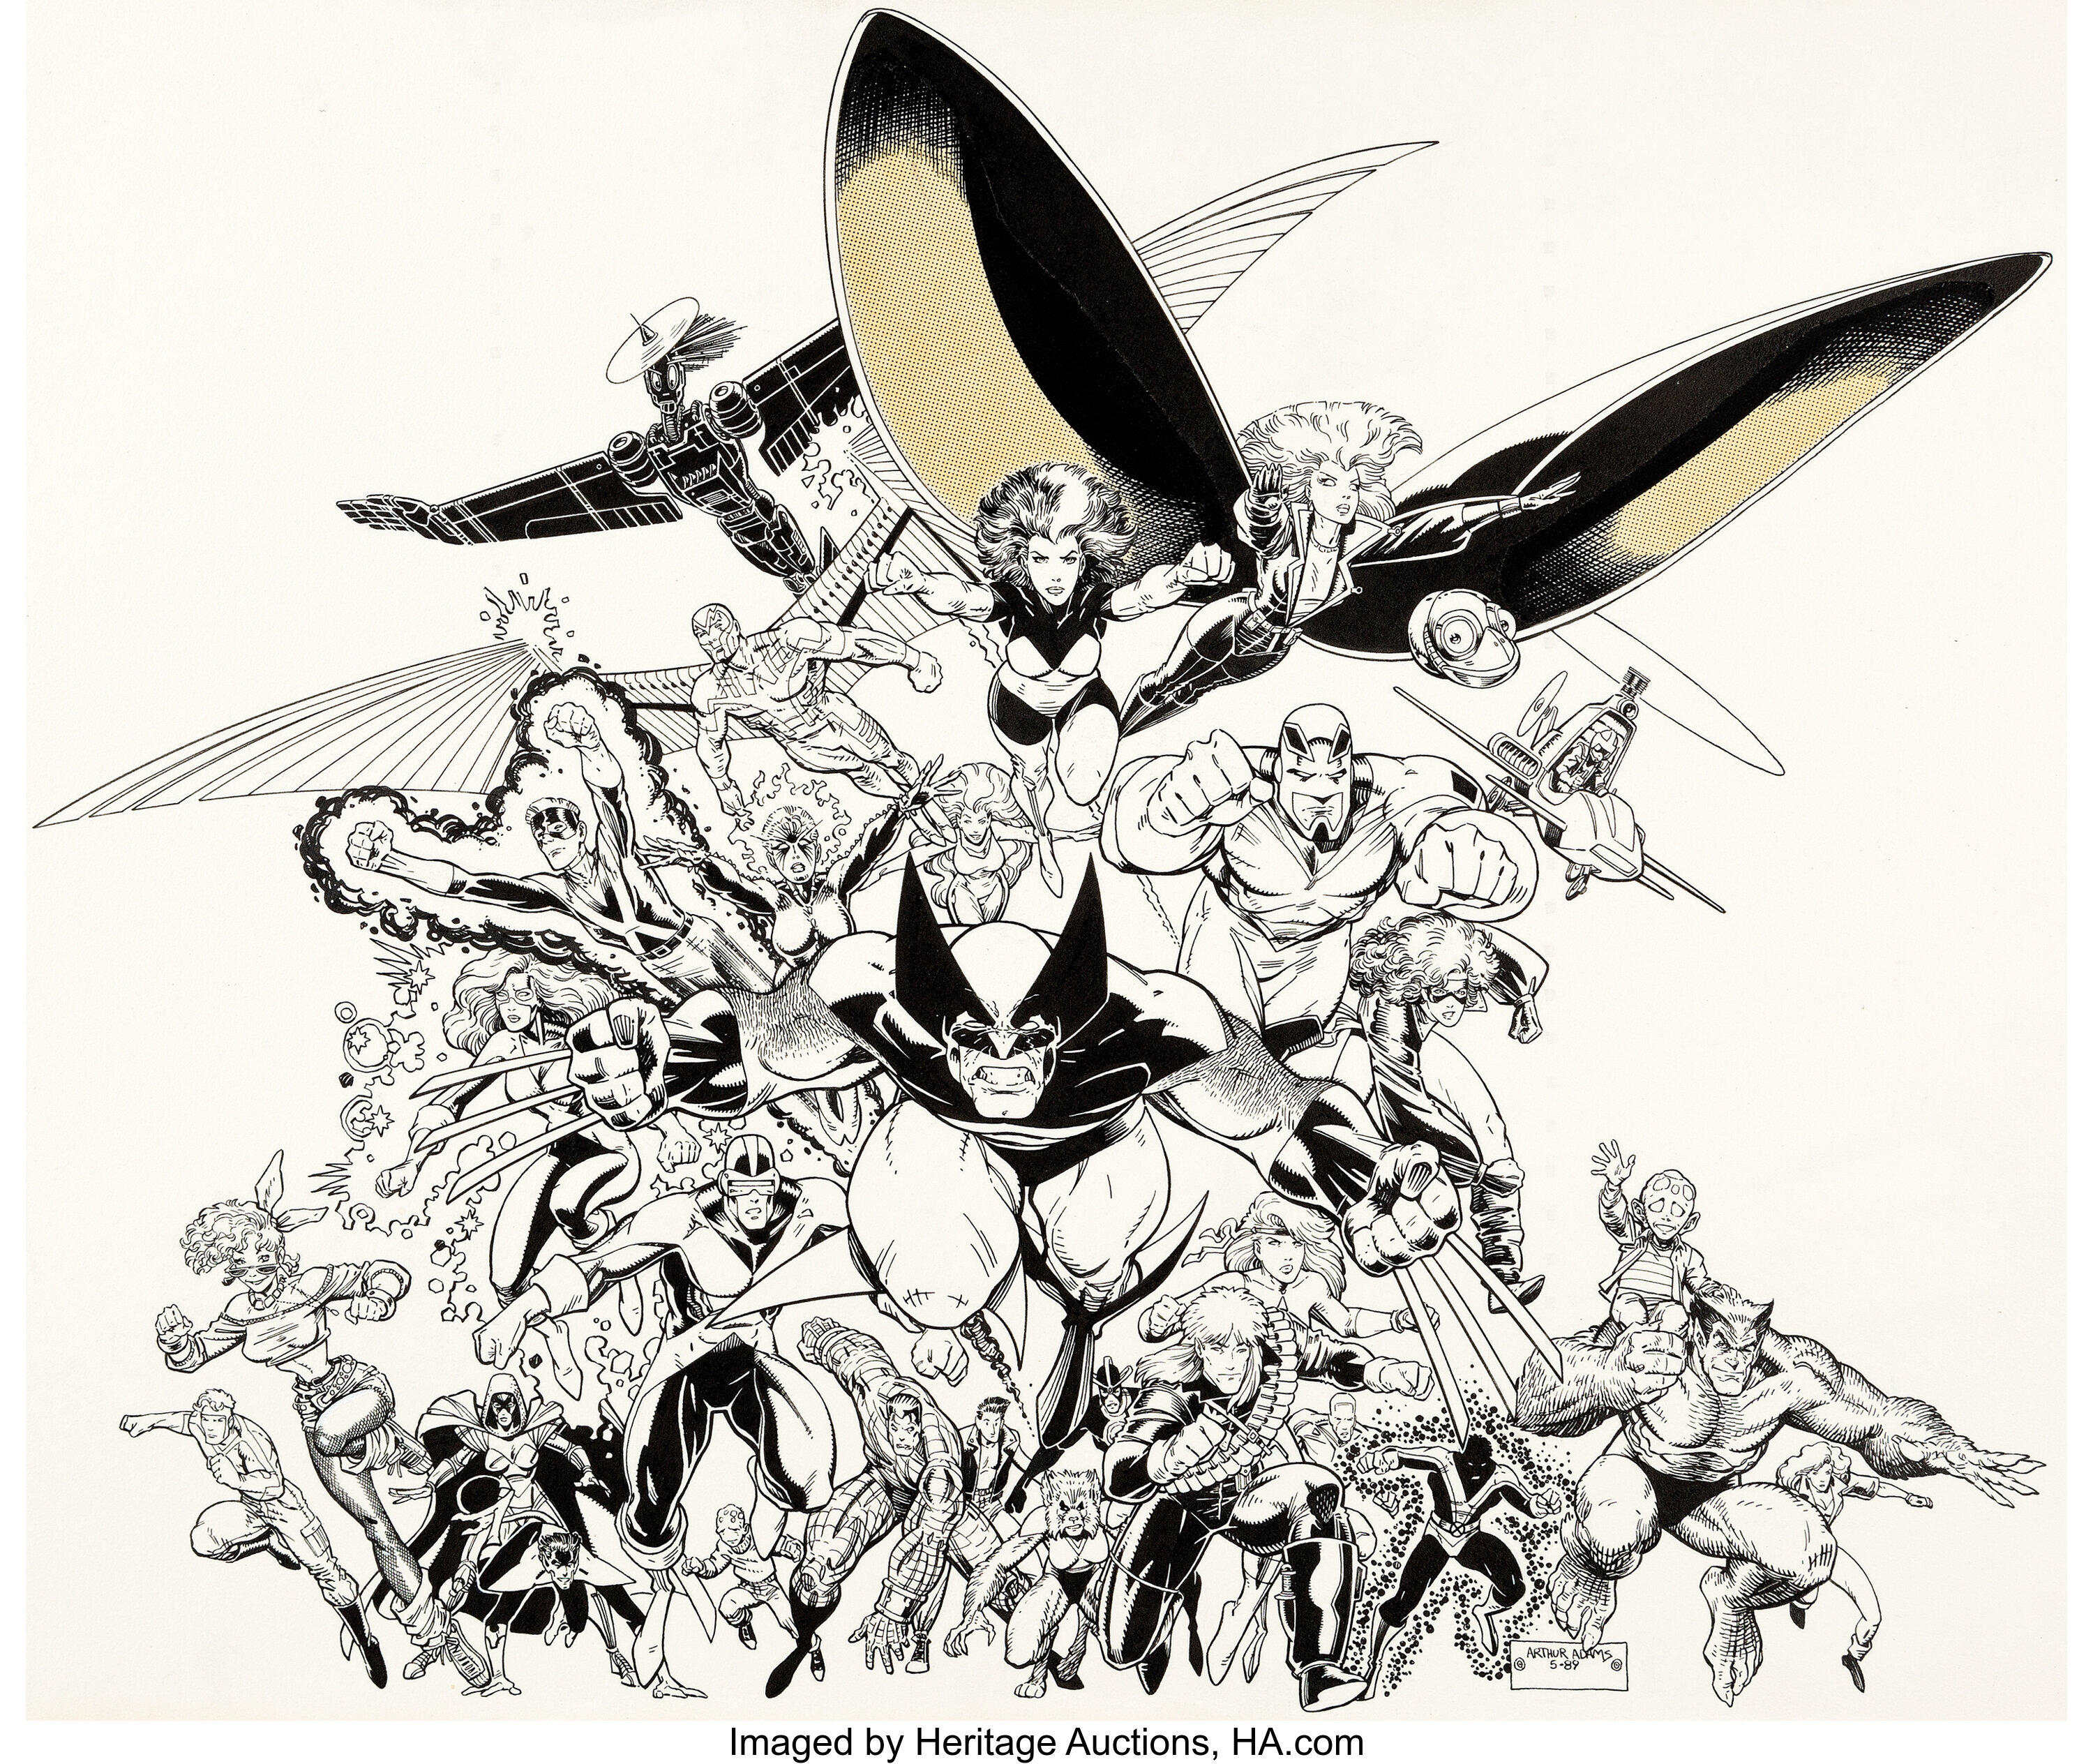 Arthur Adams Mutants X Men Related Poster Illustration Original Art Lot Heritage Auctions